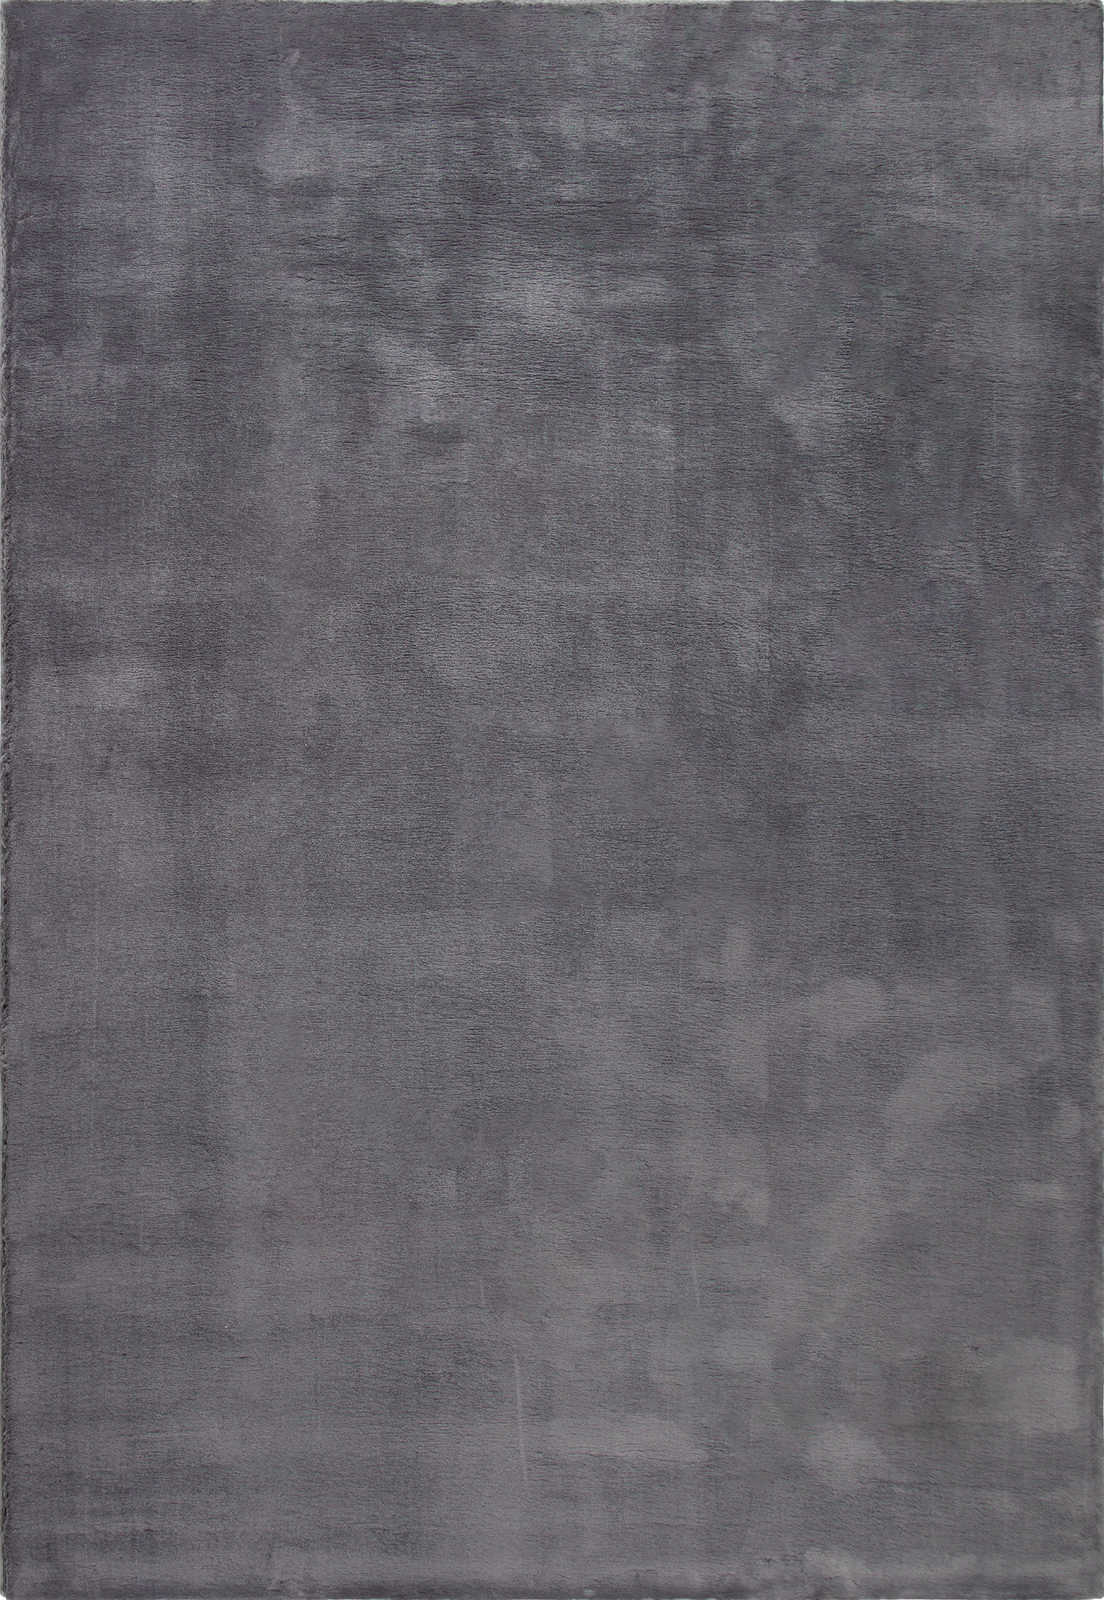             Modern high pile carpet in anthracite - 200 x 140 cm
        